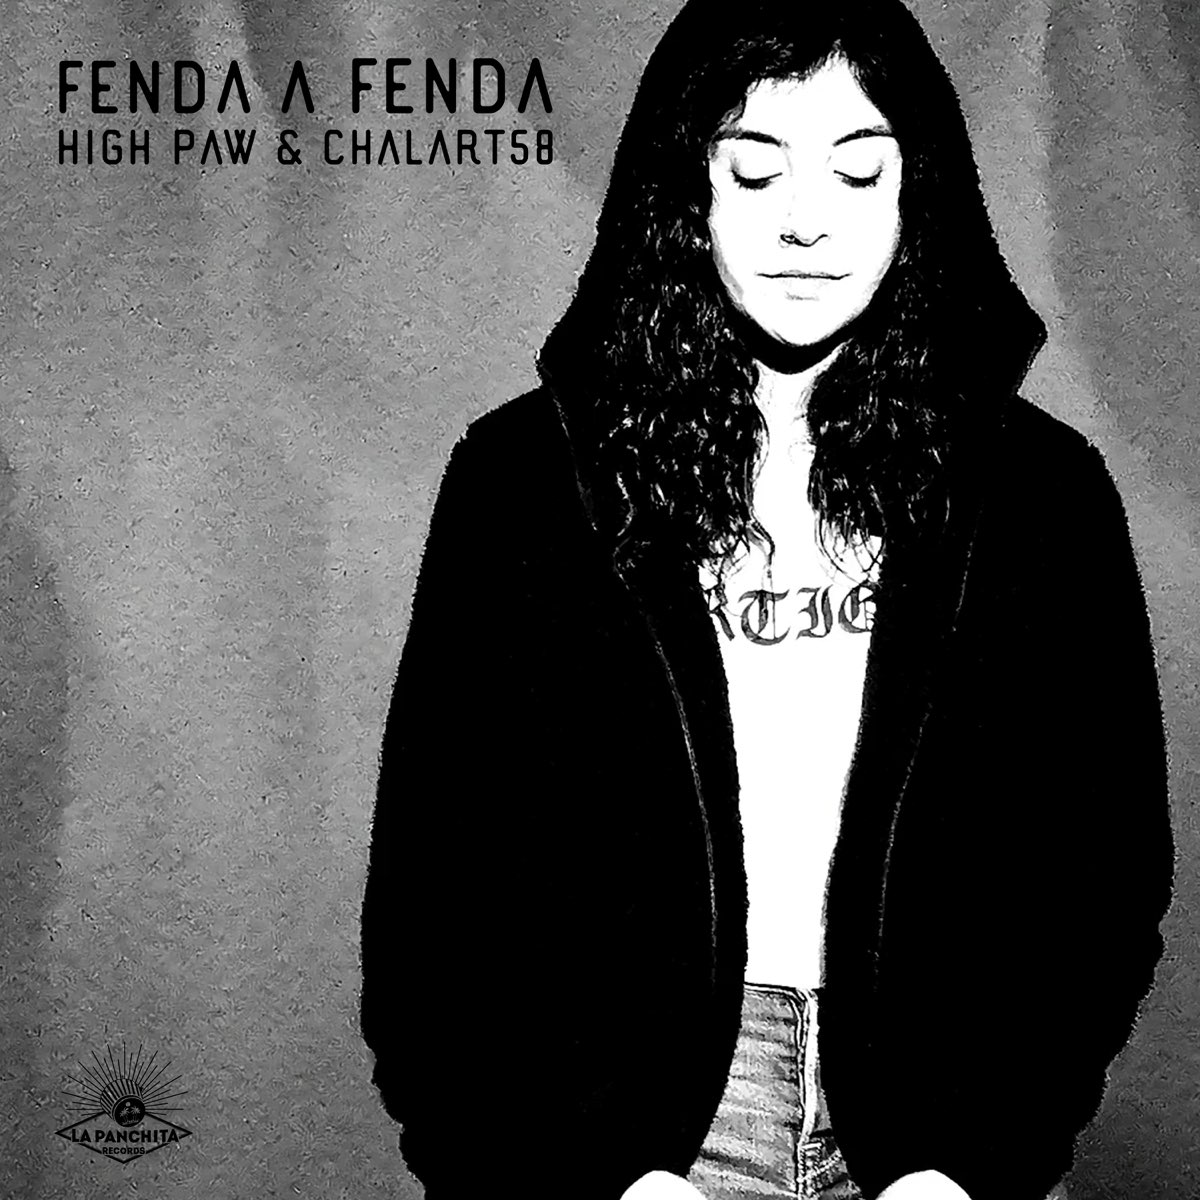 Loves gone fenda. Fenda певица. Fenda певица Википедия. High Paw певица. Chalart58.